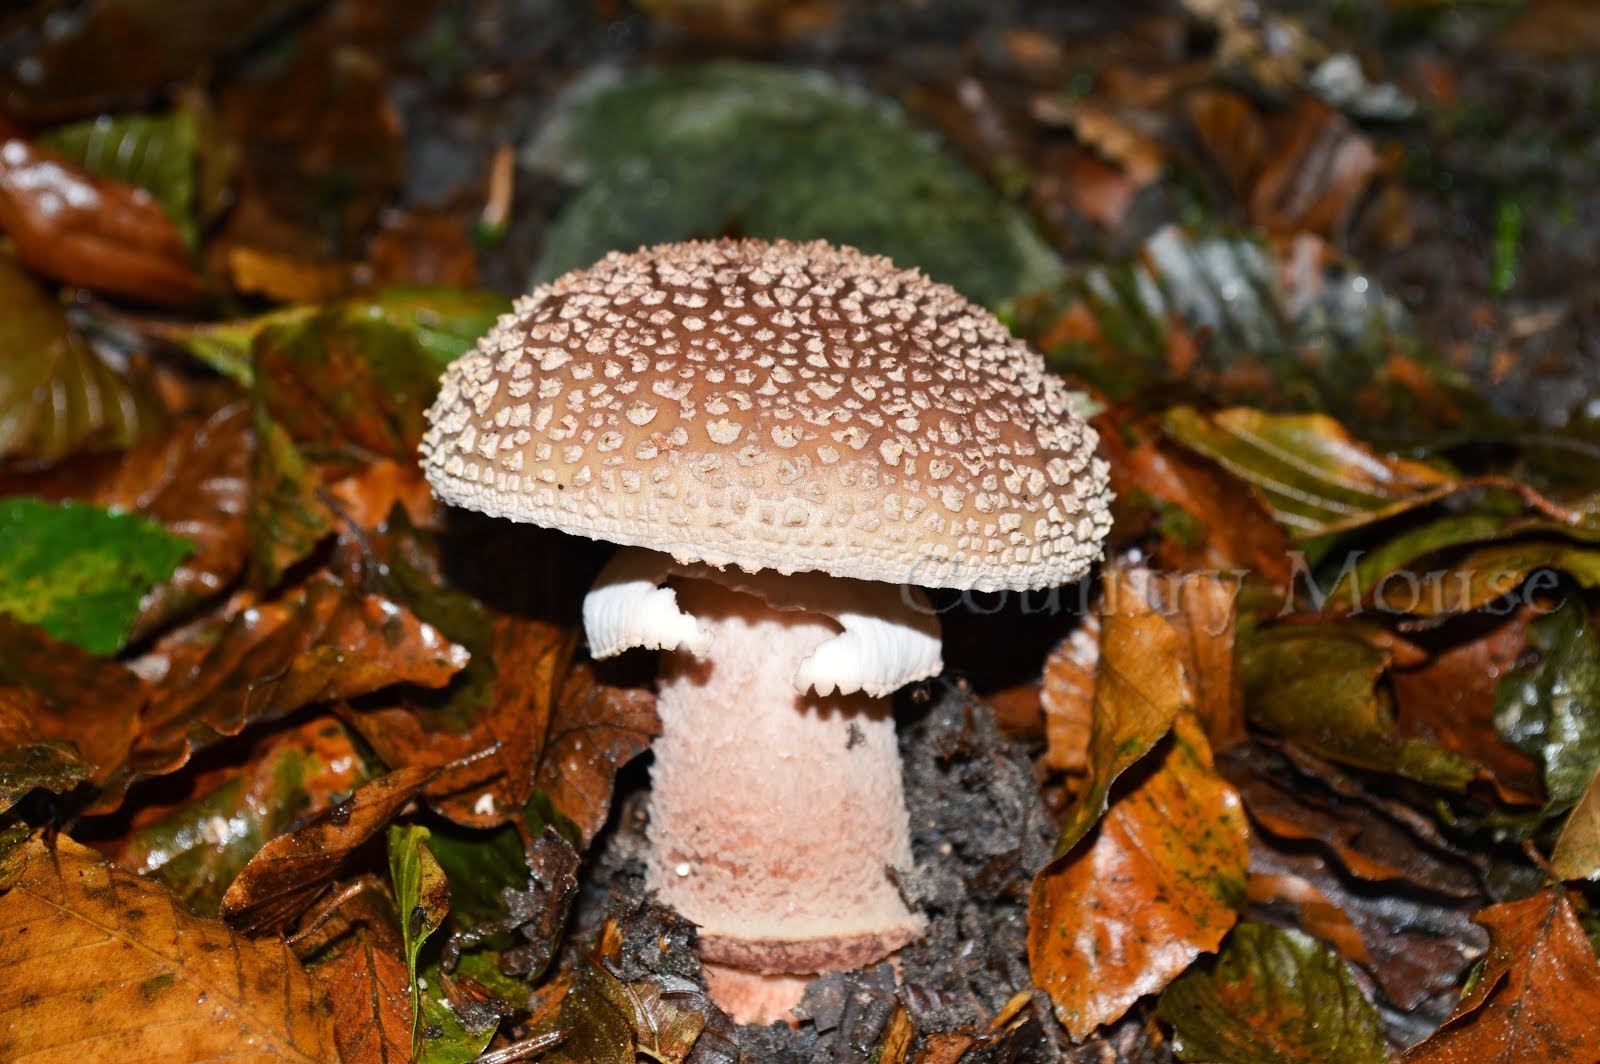 Mushroom Art and photography